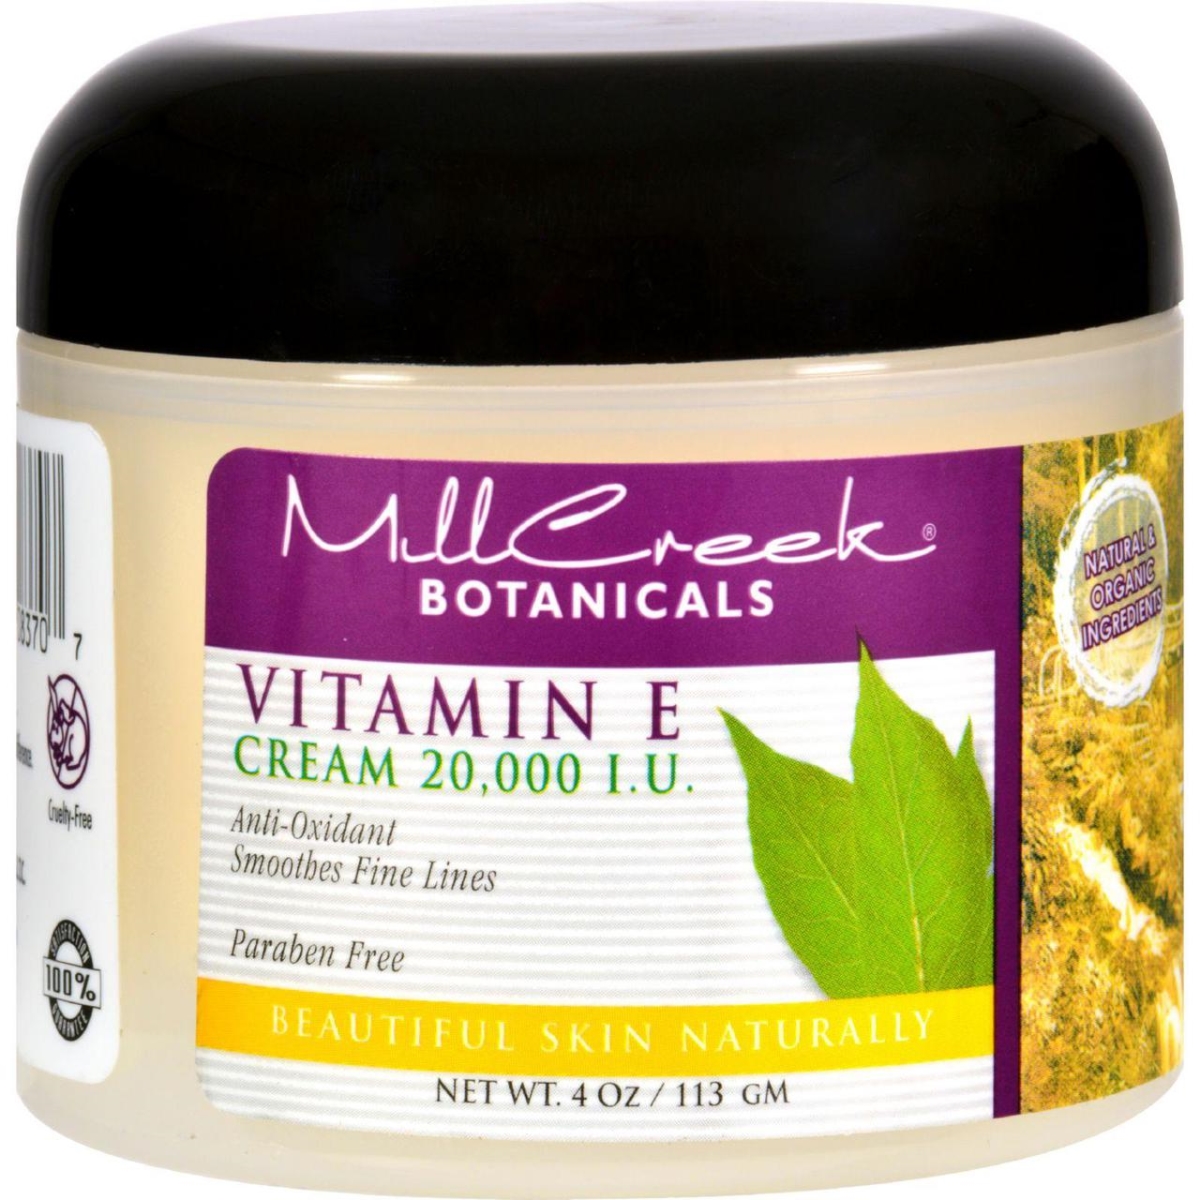 Hg0352096 4 Oz Botanicals Vitamin E Cream - 20000 Iu